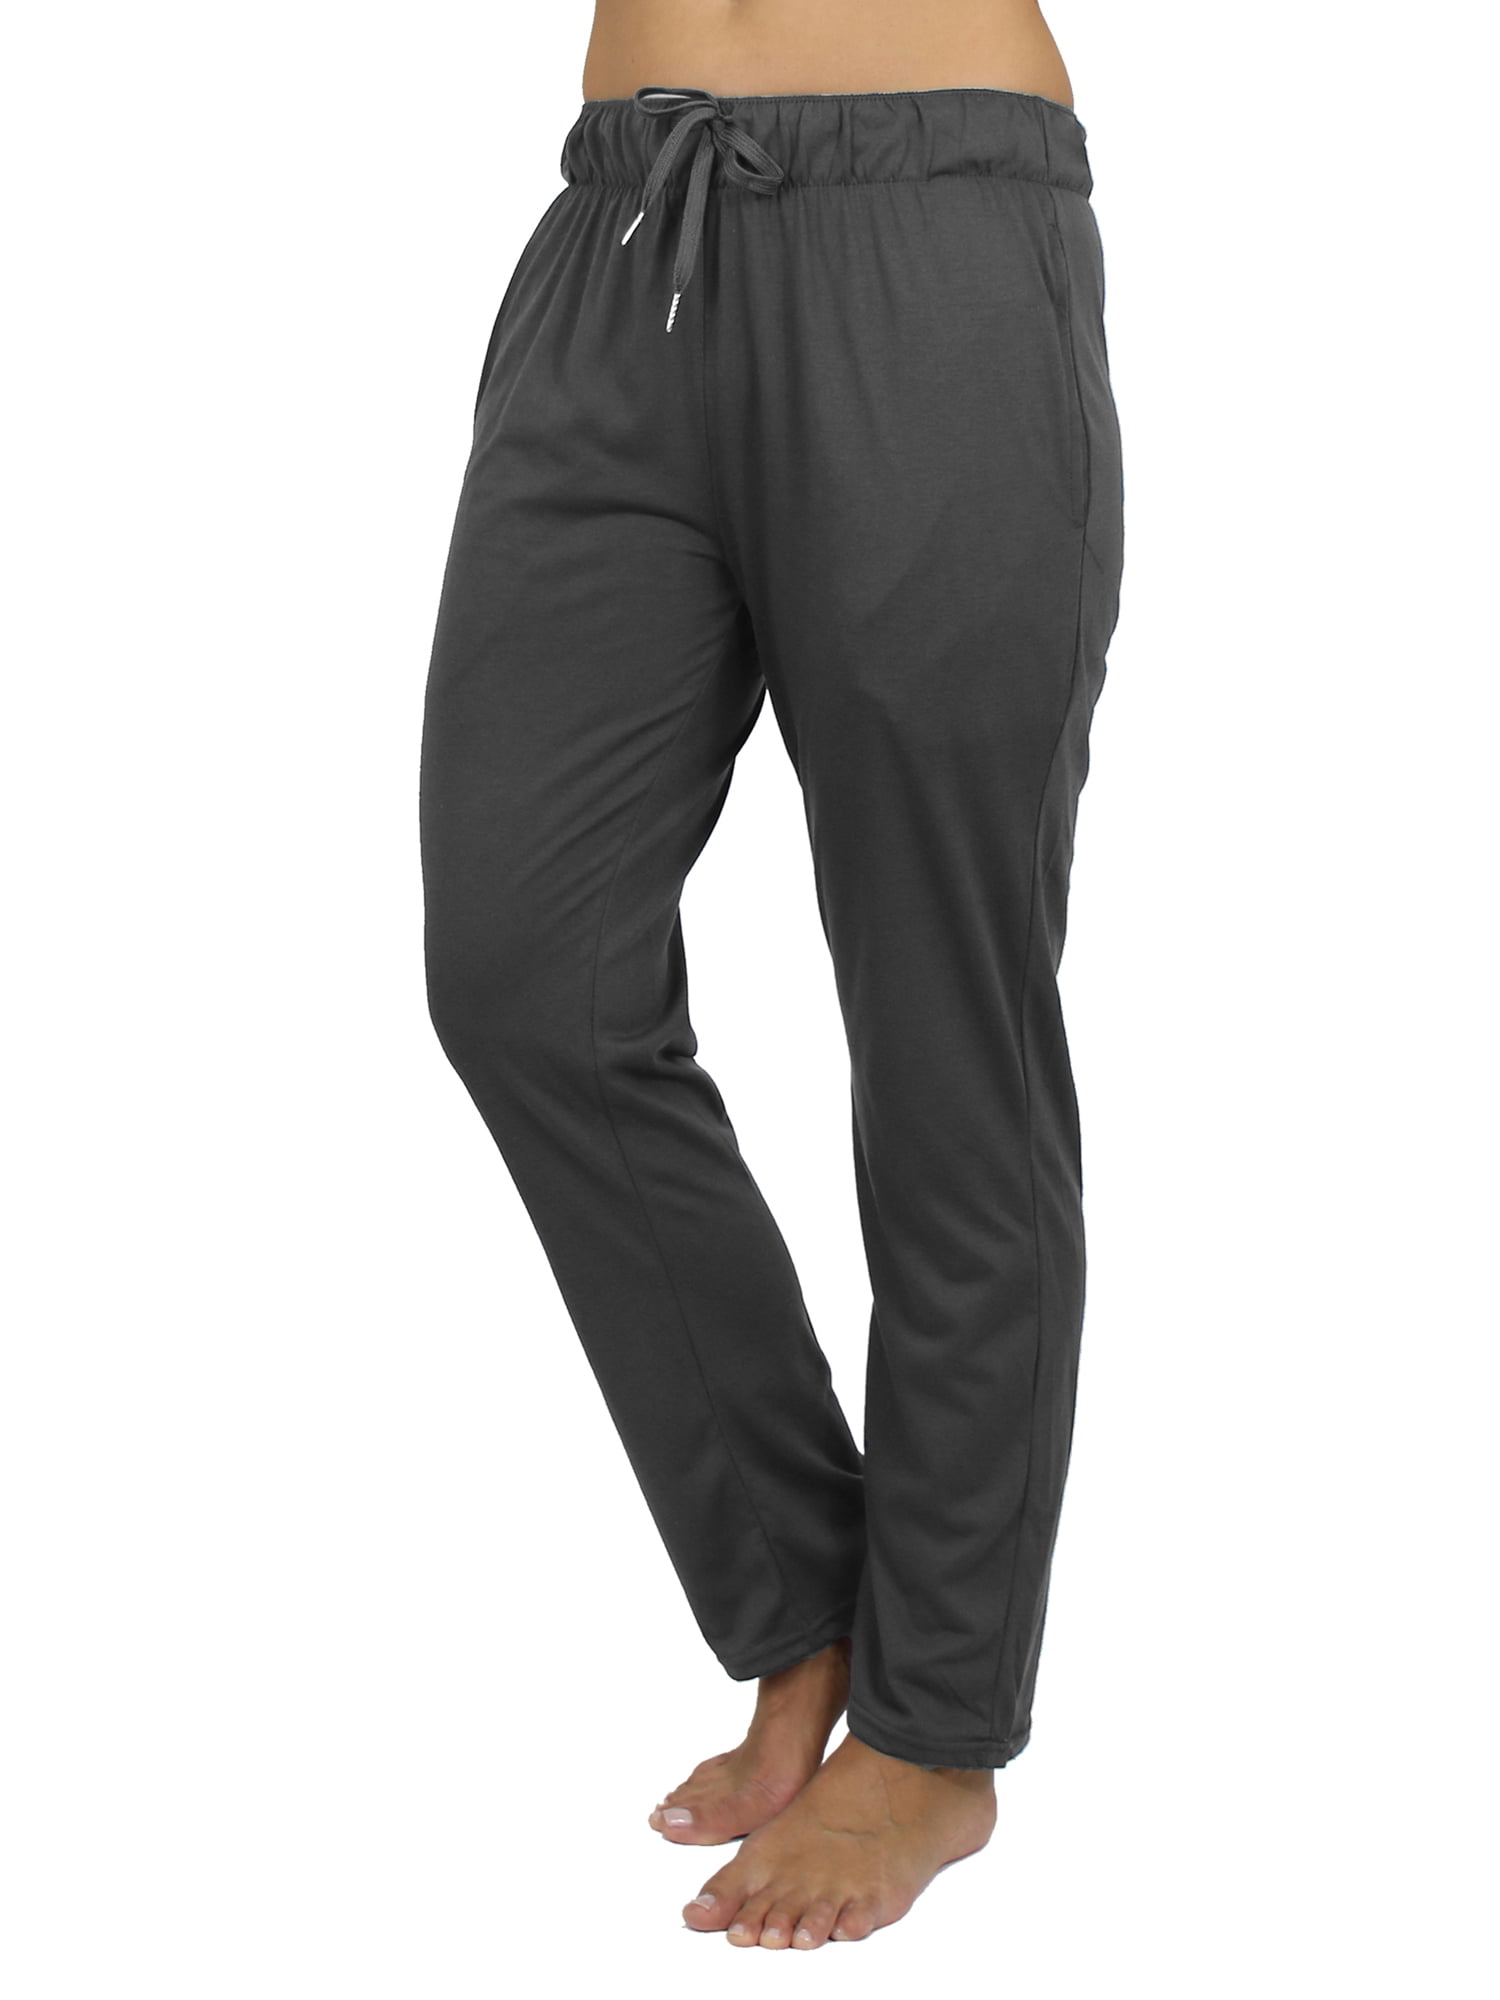 Women's Loose Fit Classic Lounge Pants (Sizes, S-3XL) - Walmart.com